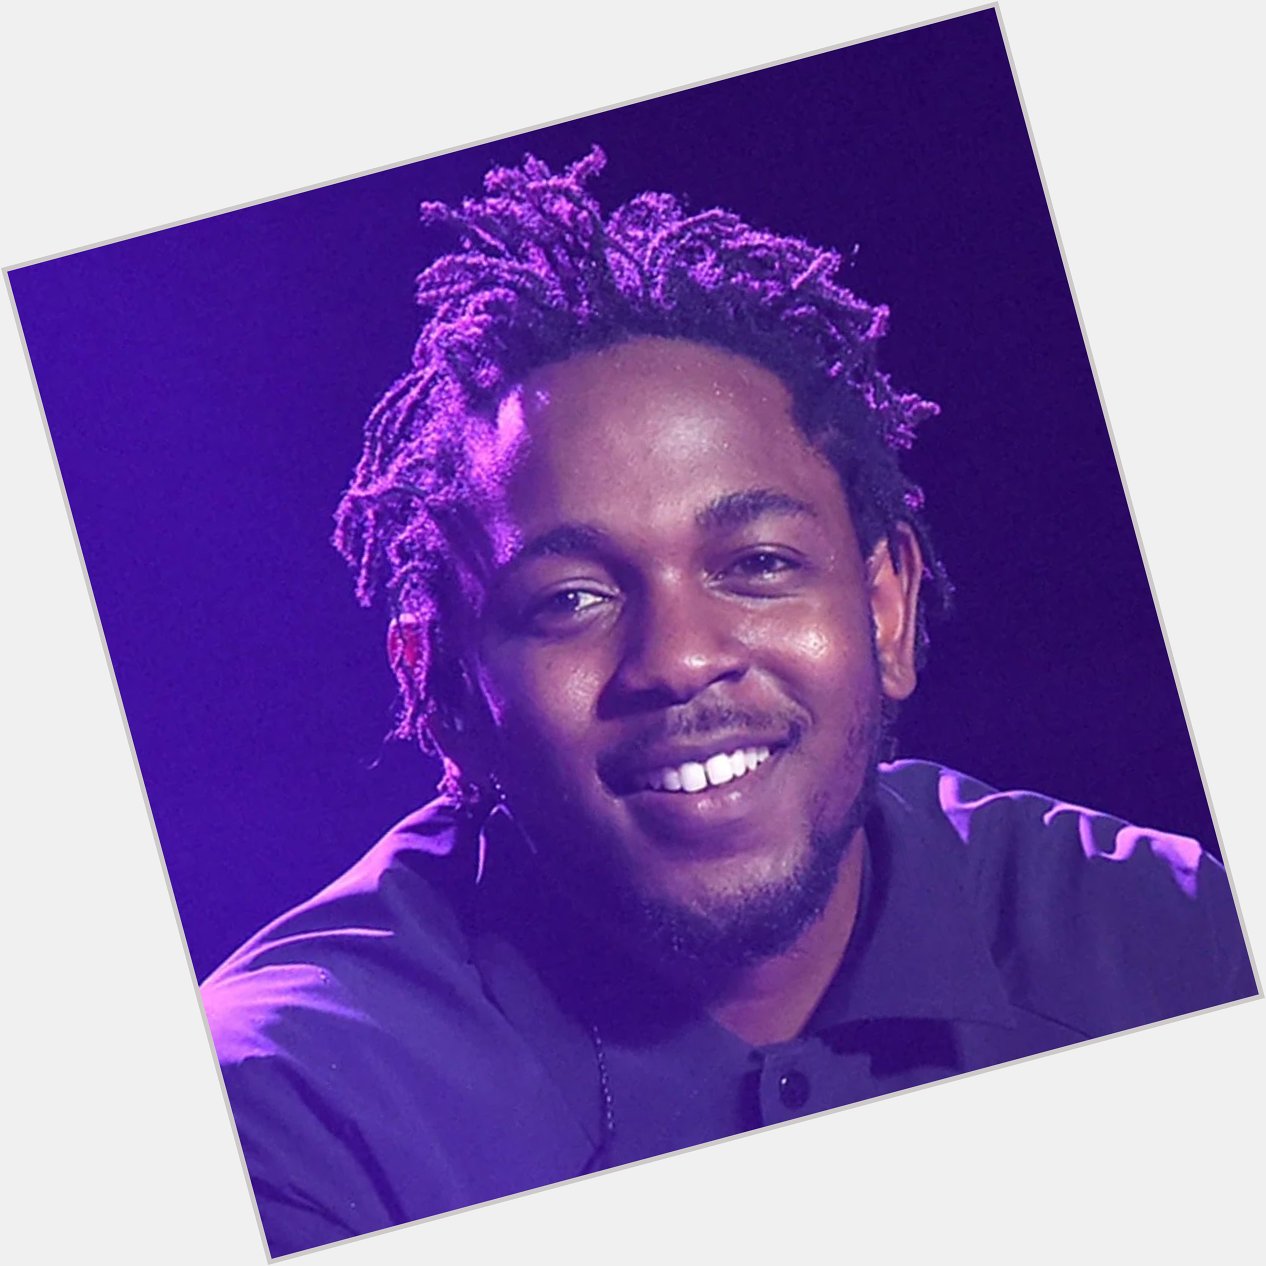 17th of June 
Happy birthday Kendrick Lamar 